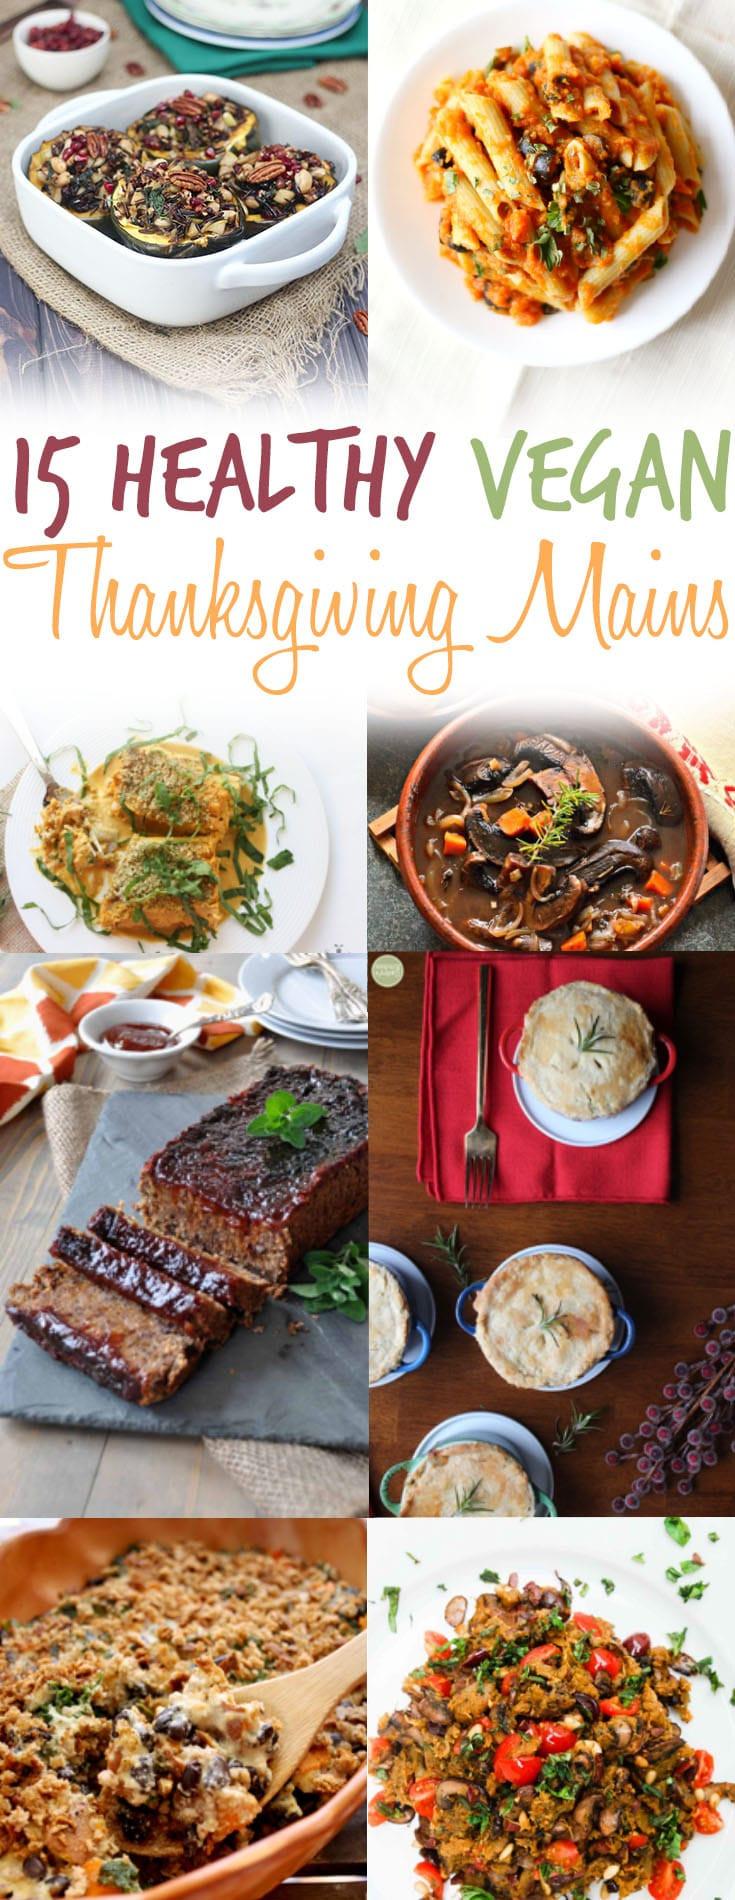 Thanksgiving Main Dishes
 15 Vegan Thanksgiving Main Dishes